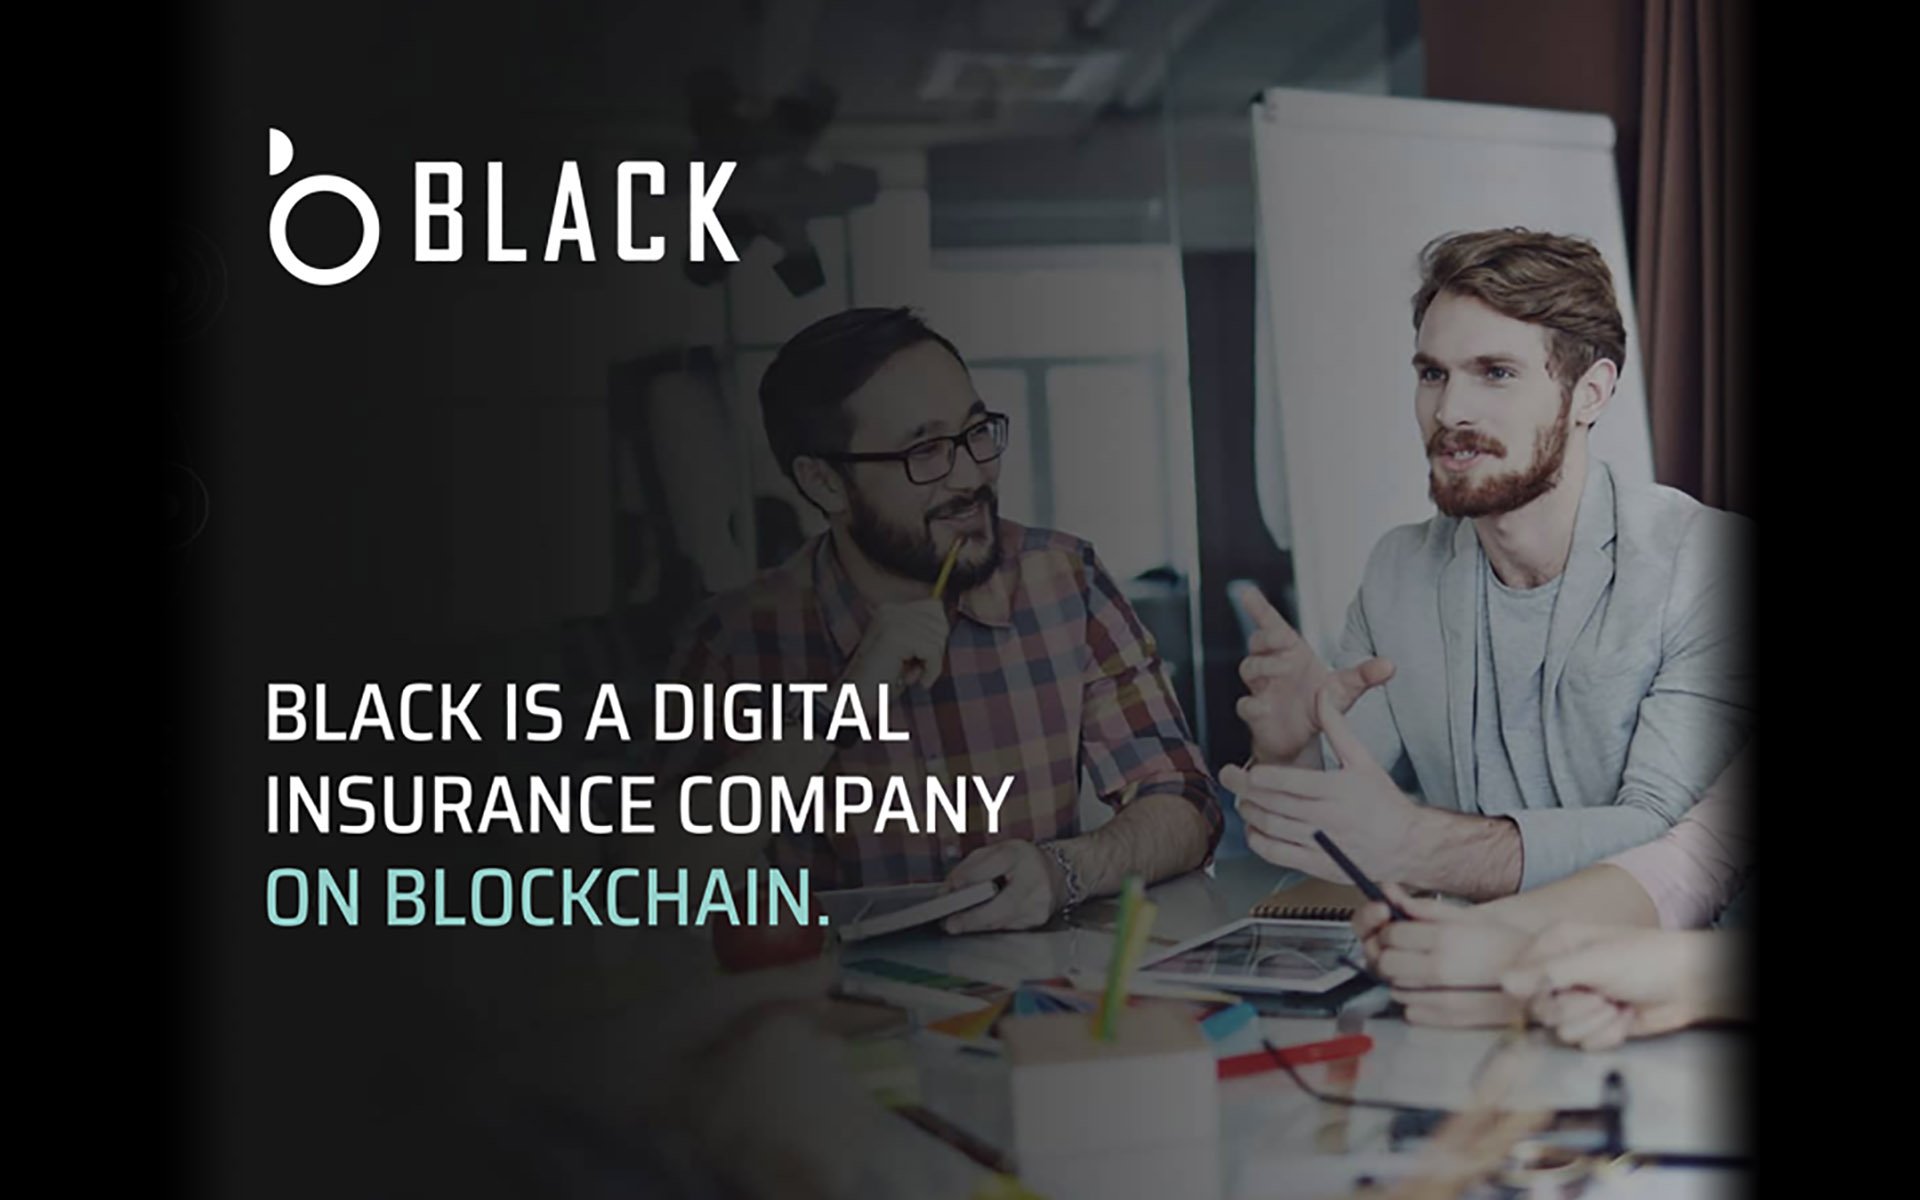 Digital Insurance Provider on Blockchain, Black Insurance Ropes in Professor Alex Norta as the Scientific Advisor